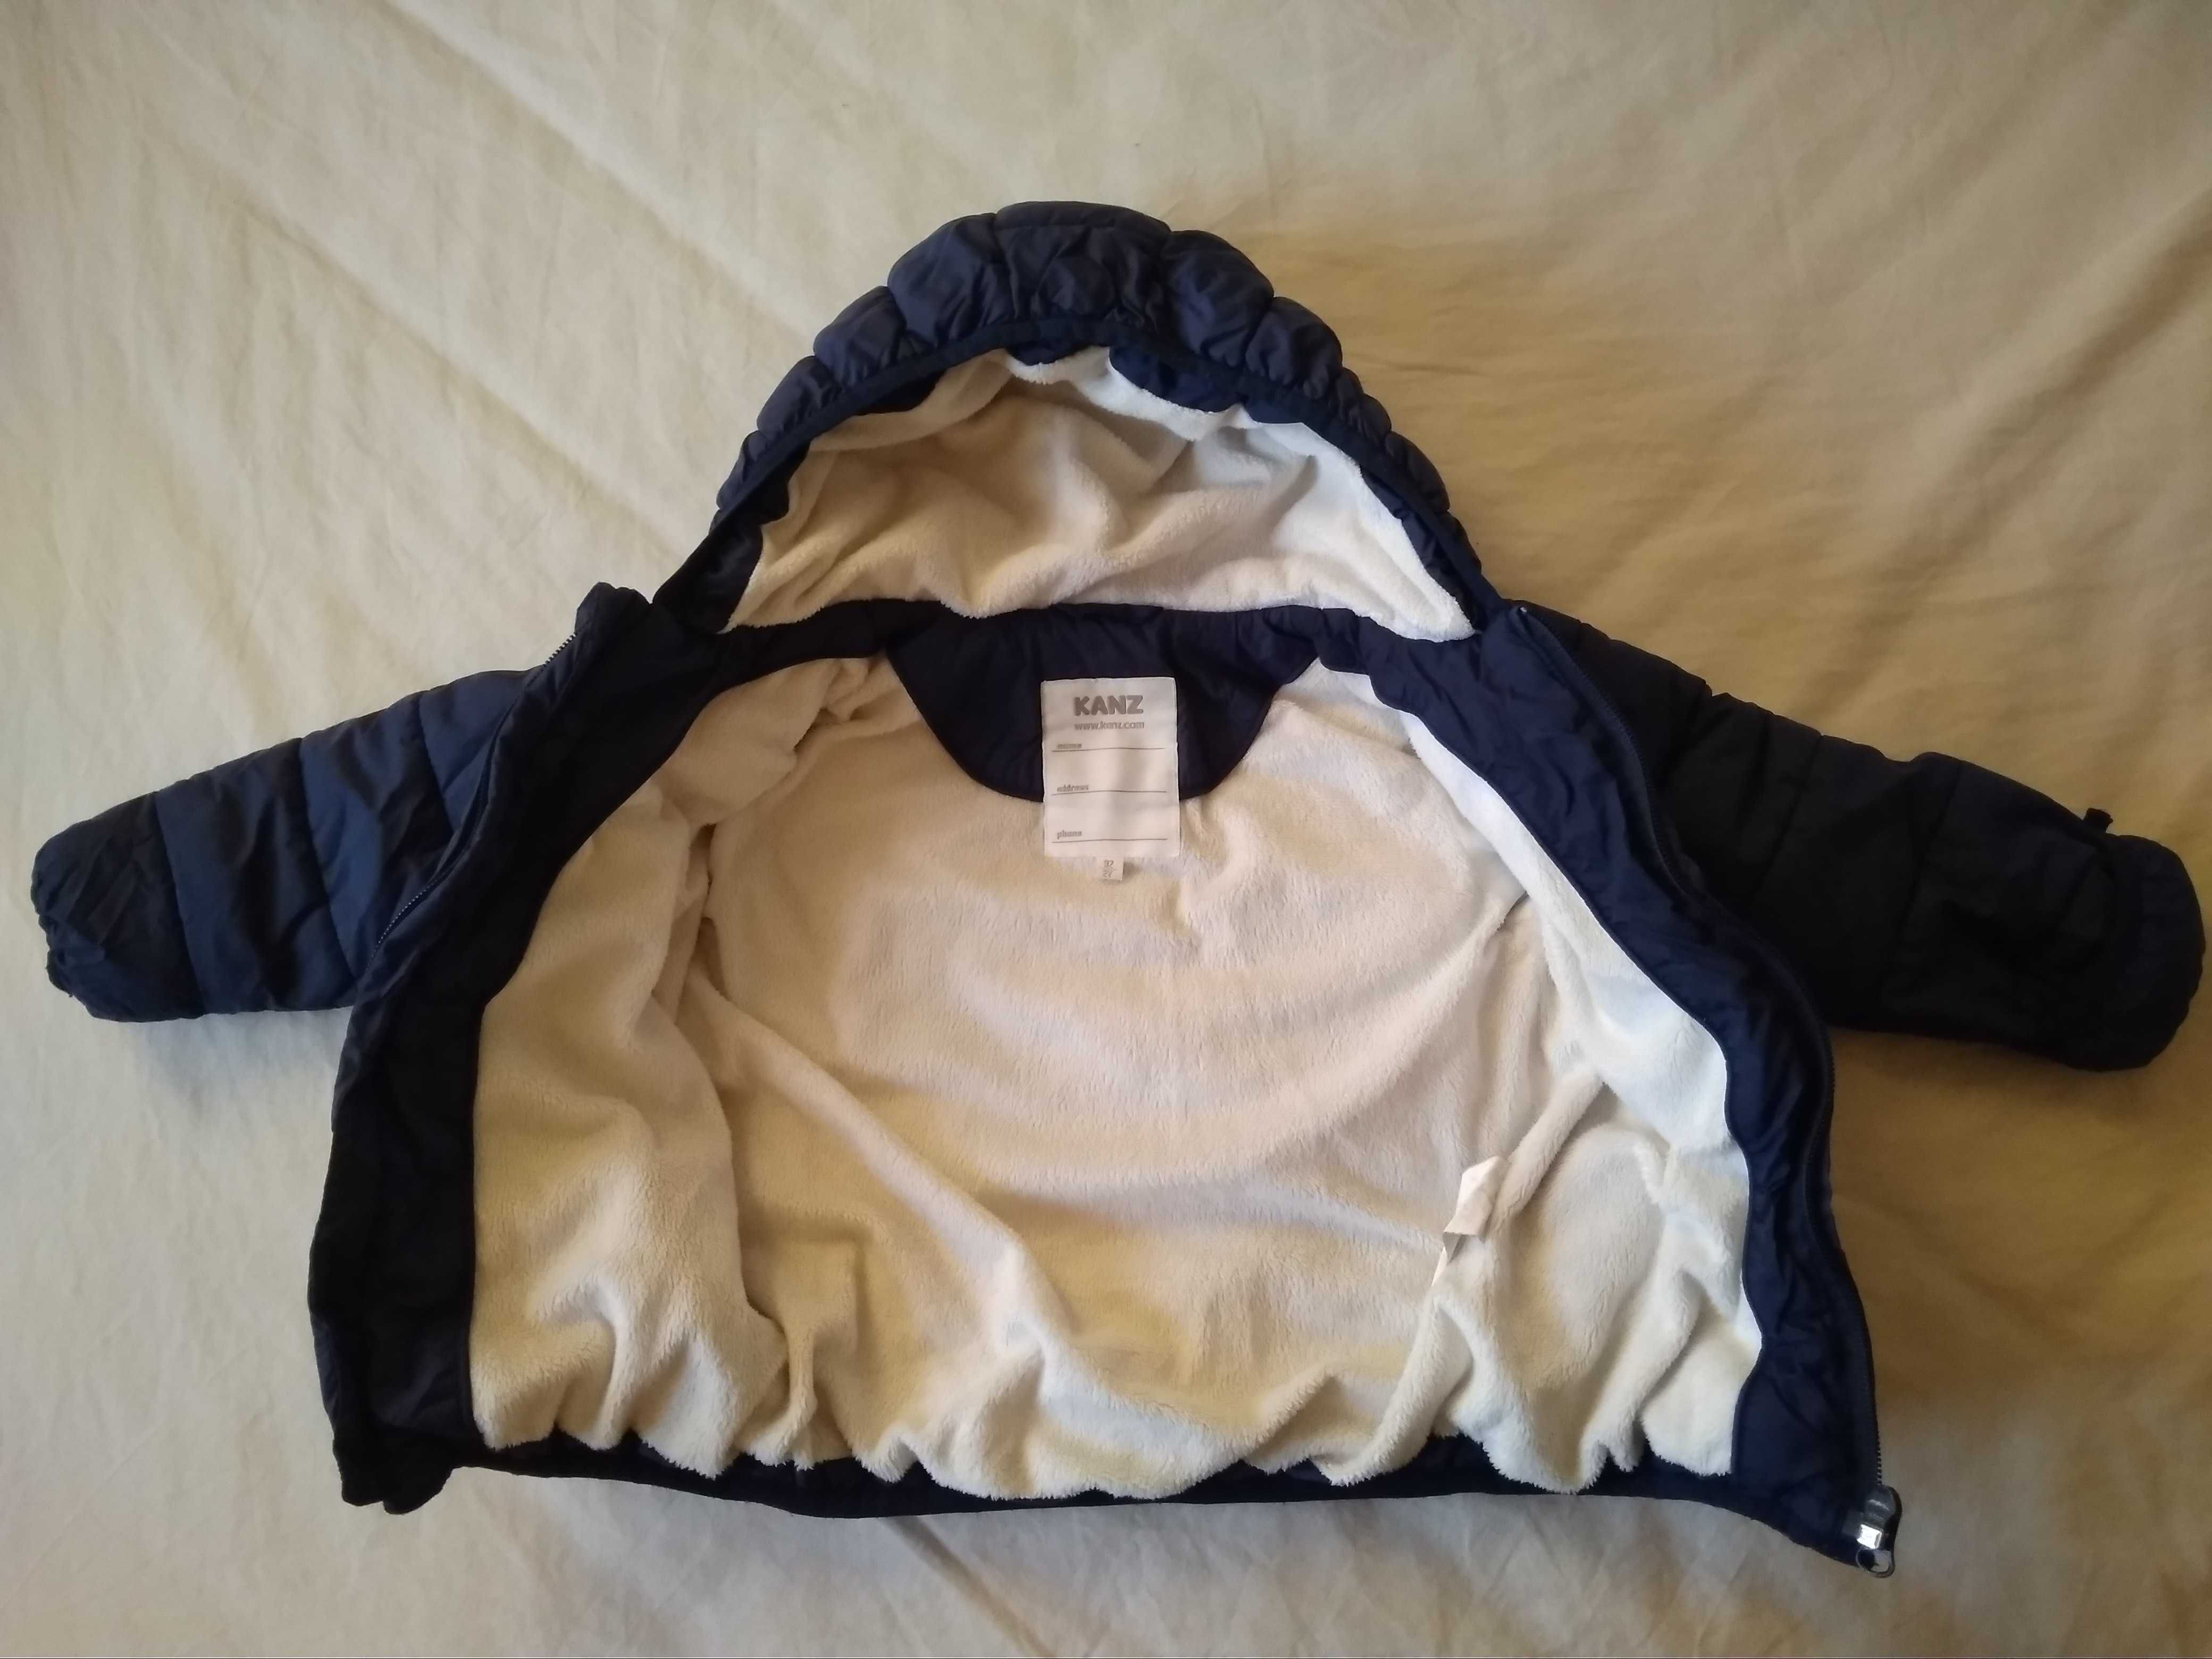 Демисезонная курточка,  куртка "KANZ"  (КАНЦ)  на 1-2 года, ОБМЕН